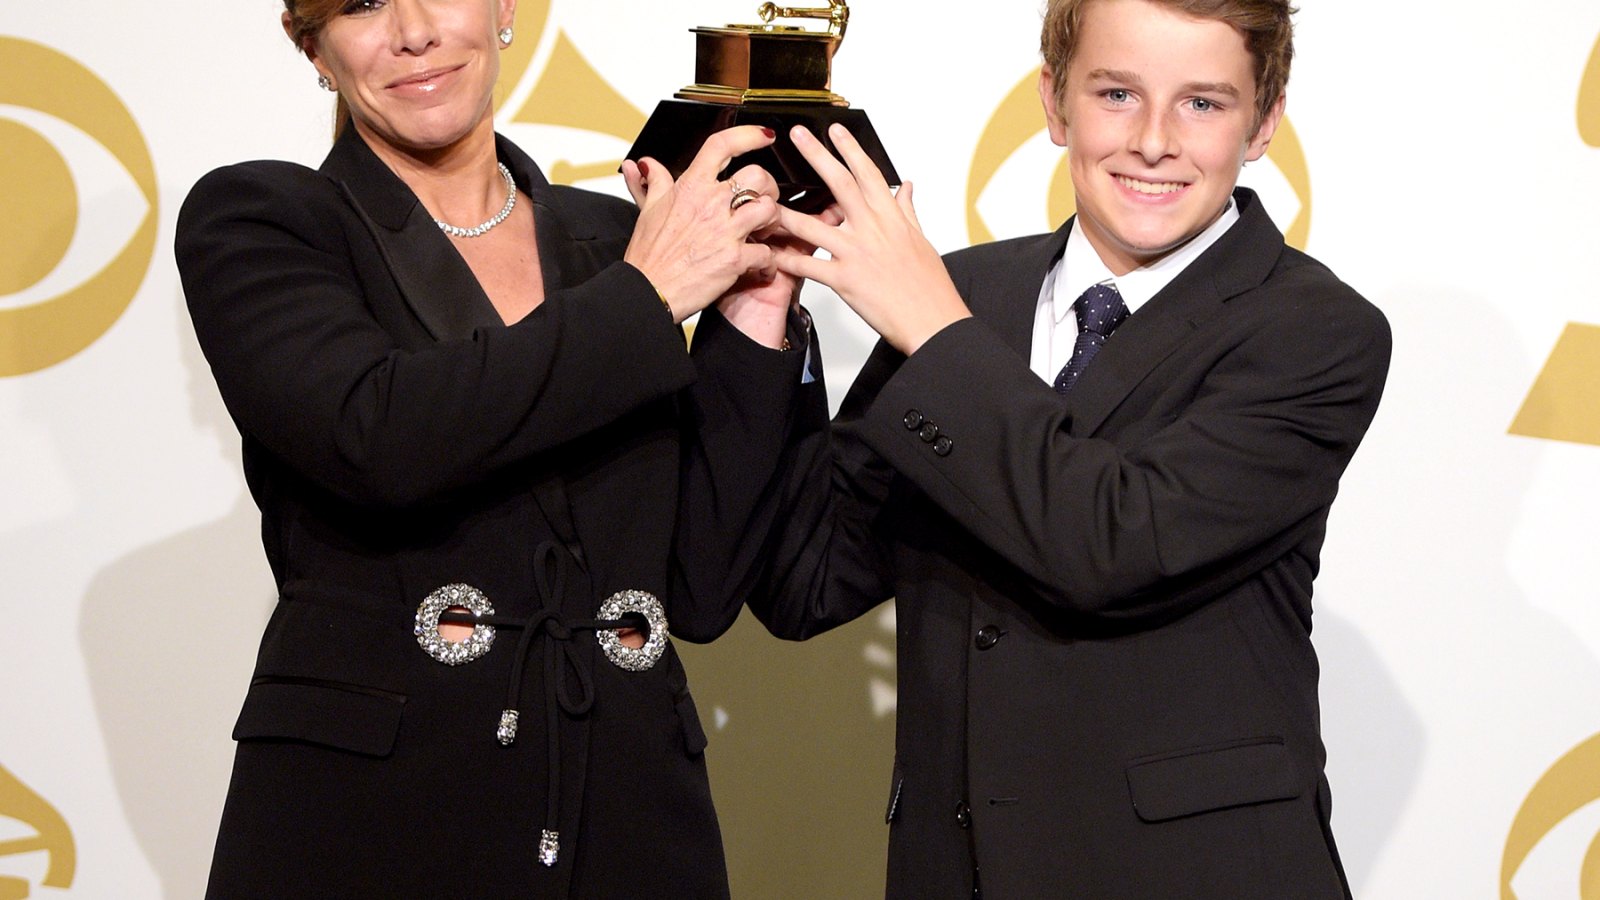 Melissa Rivers, Son Cooper Accept Grammy Award on Behalf of Late Joan